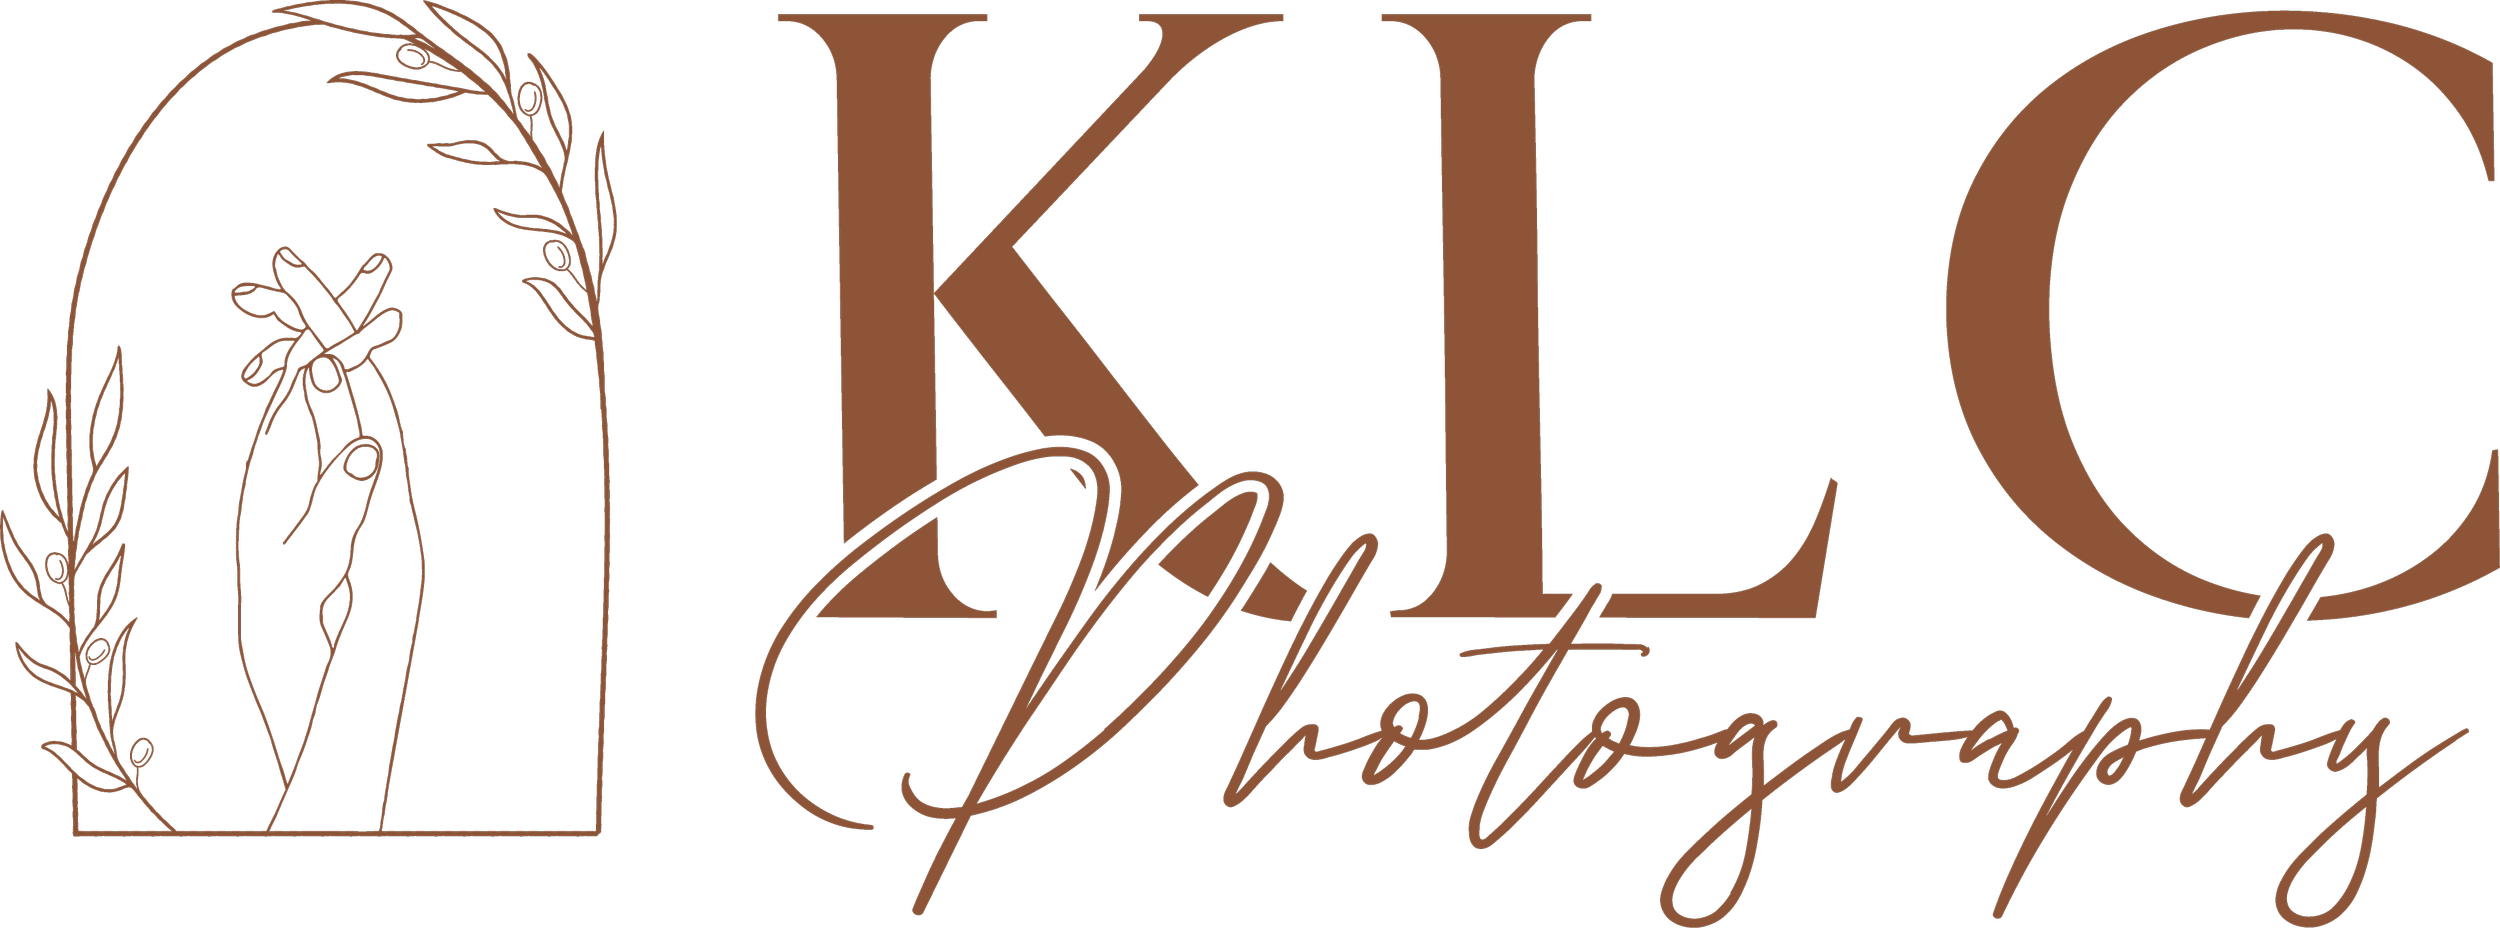 Ksikappa photography | Logo design contest | 99designs